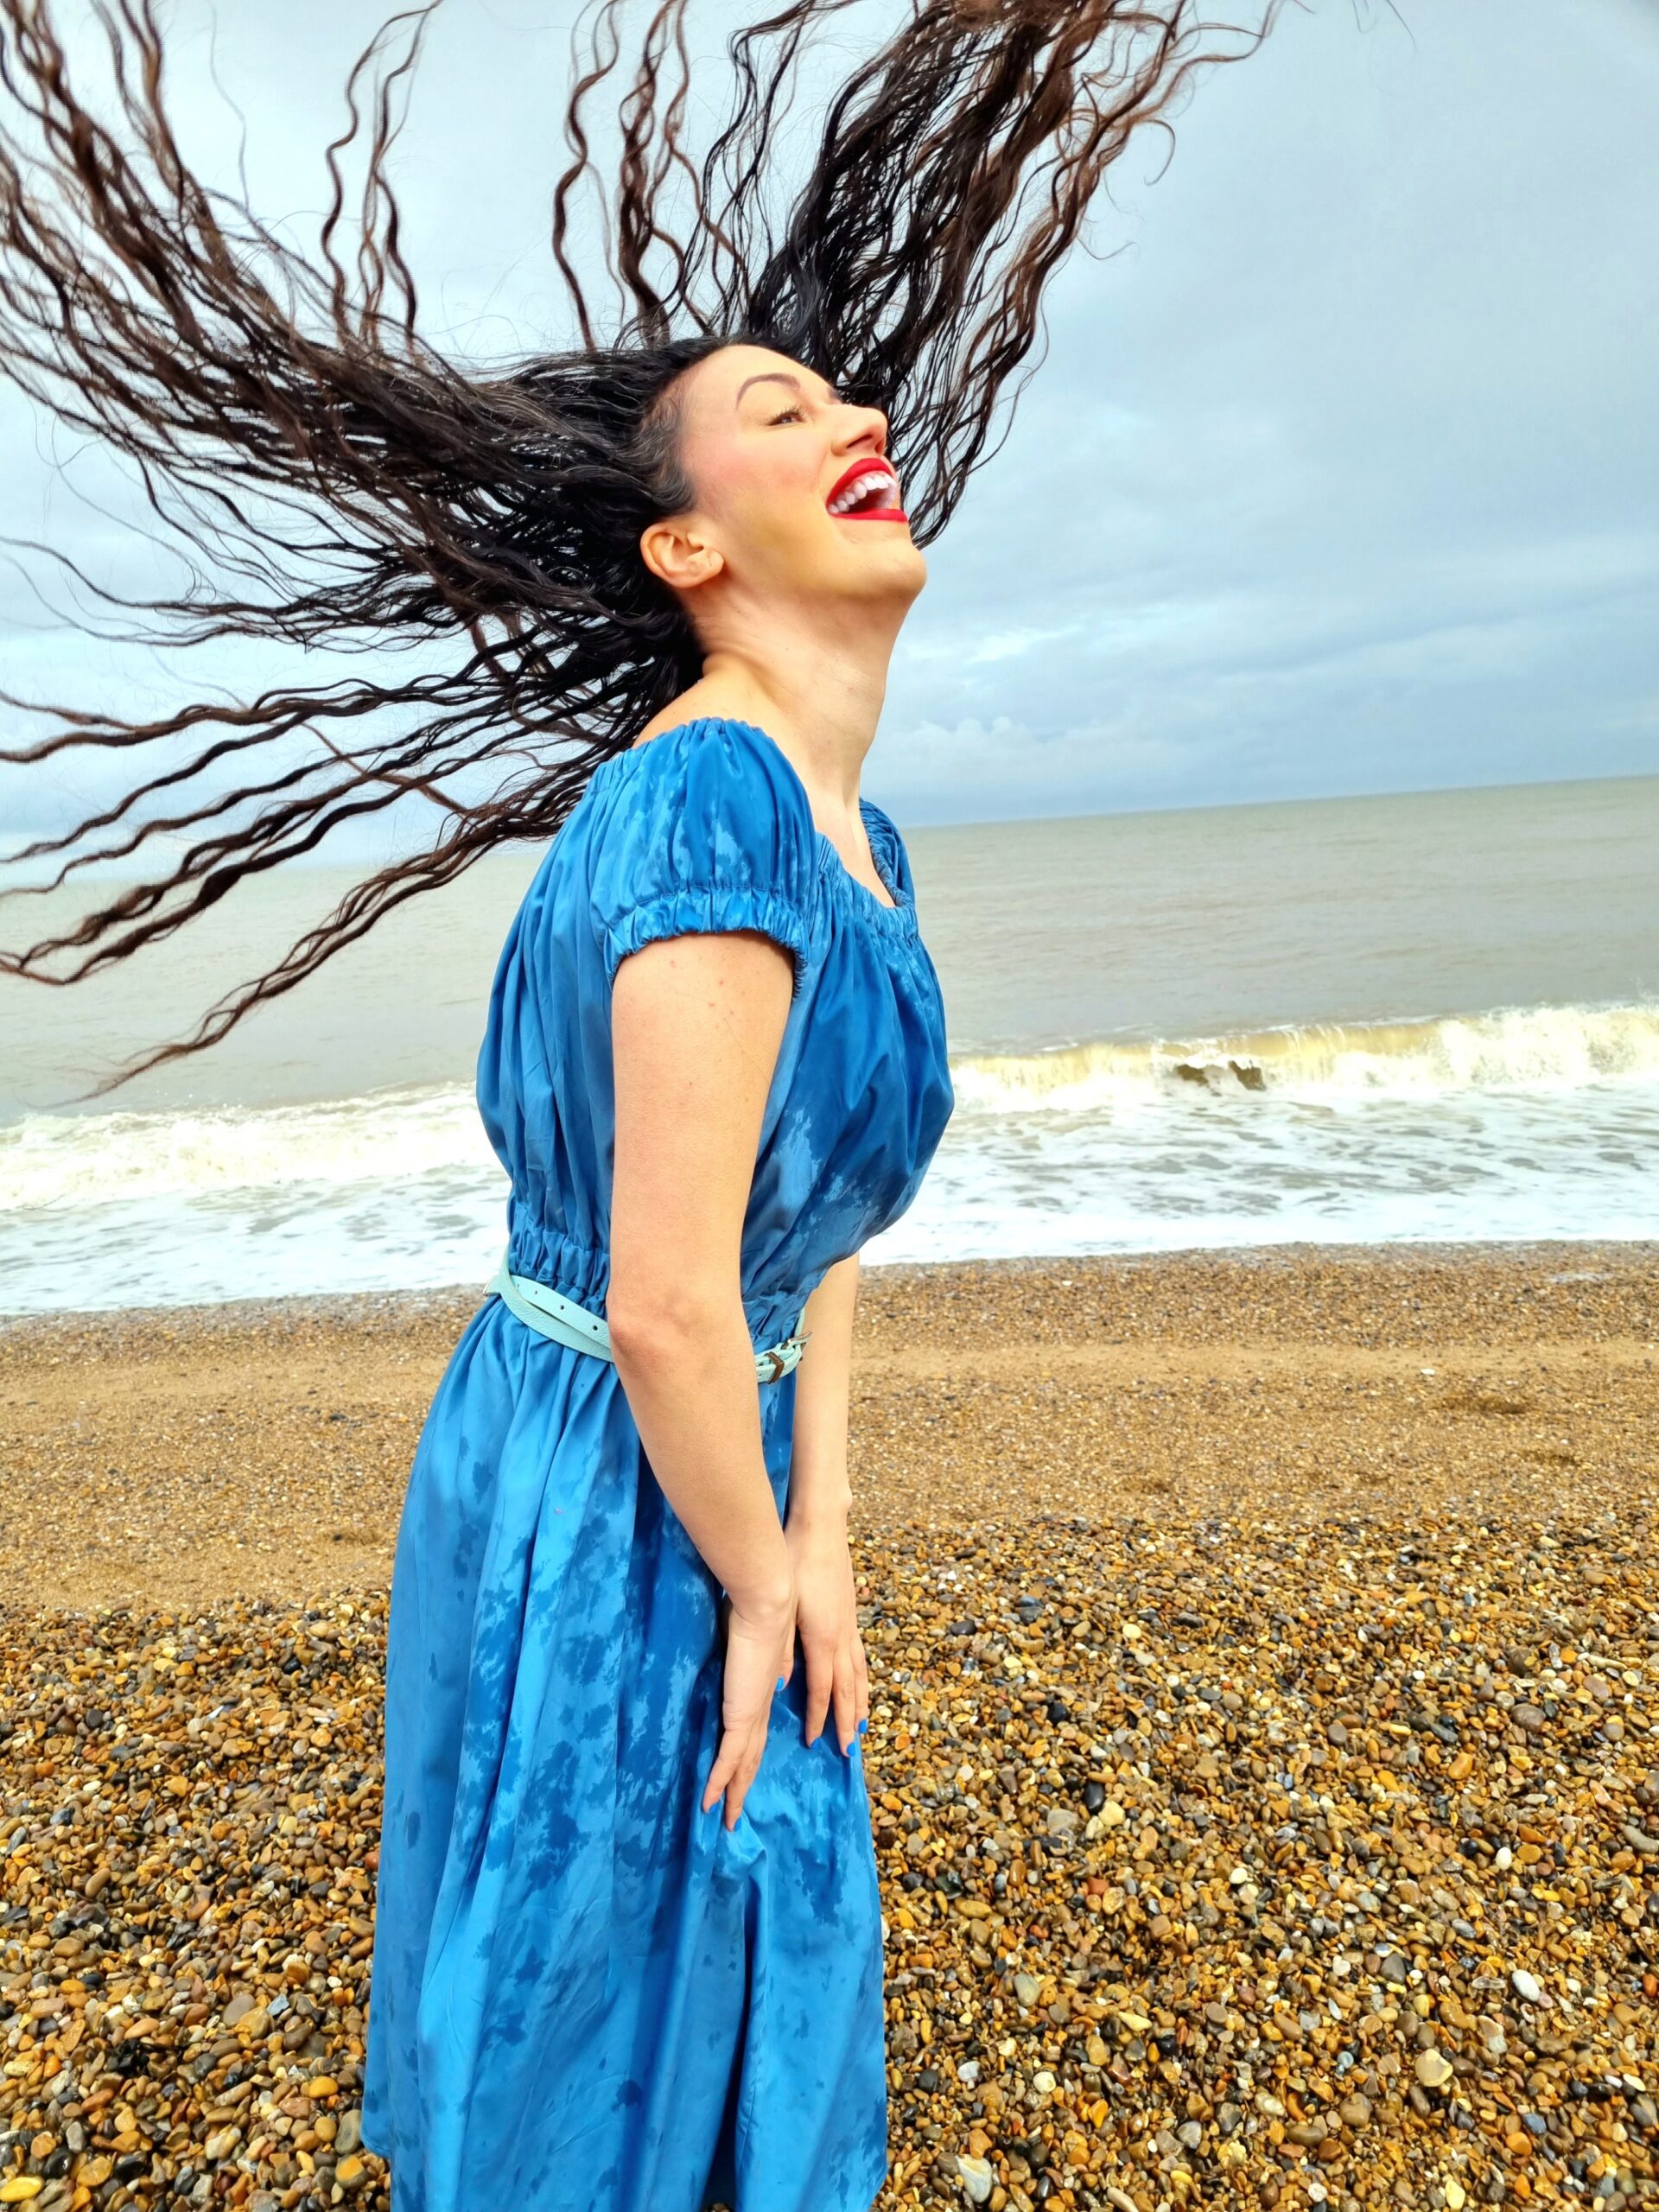 <img src="ana.jpg" alt="ana doing a hair flip on Aldeburgh Beach"/>